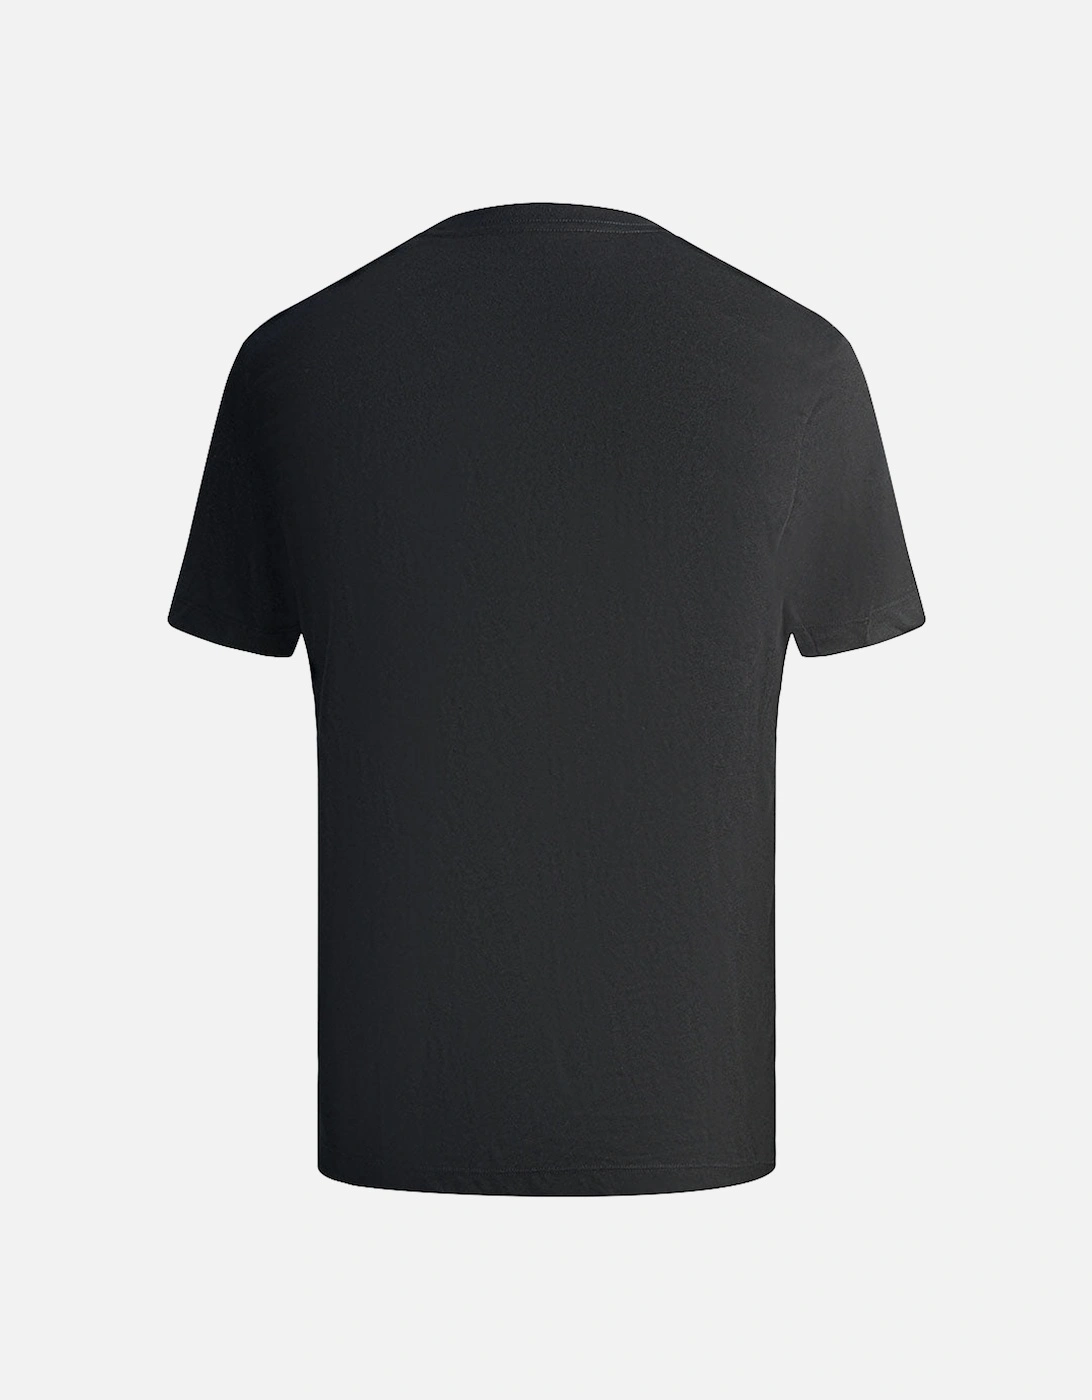 Circle Logo Black T-Shirt